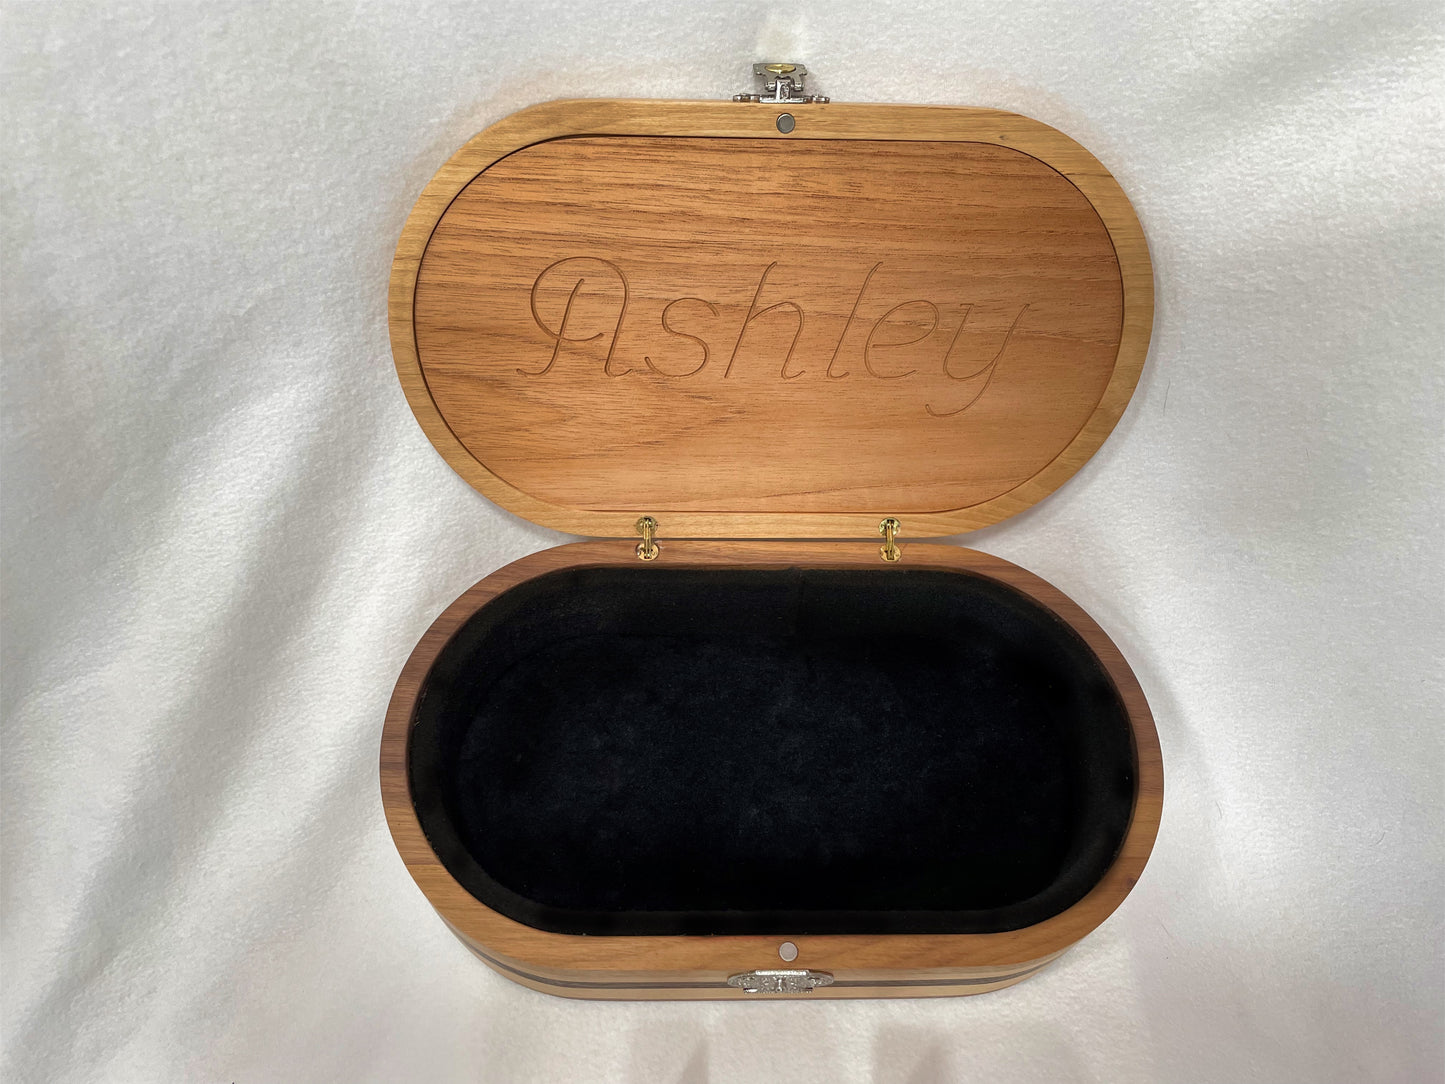 "The Ashley" Jewelry Box